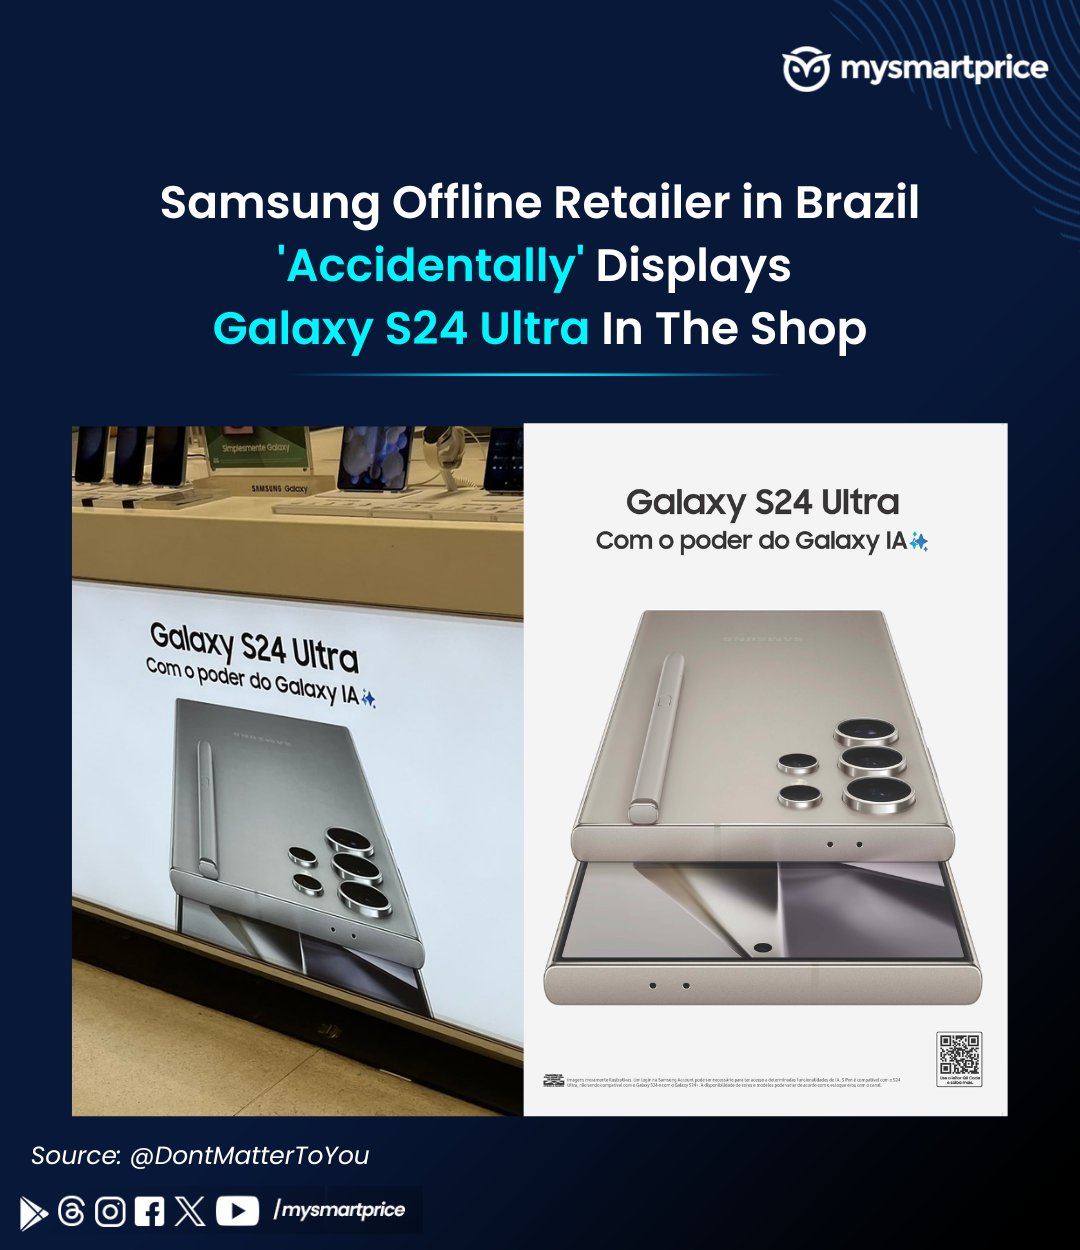 Samsung Galaxy S24 Ultra leaks via marketing posters in Brazil